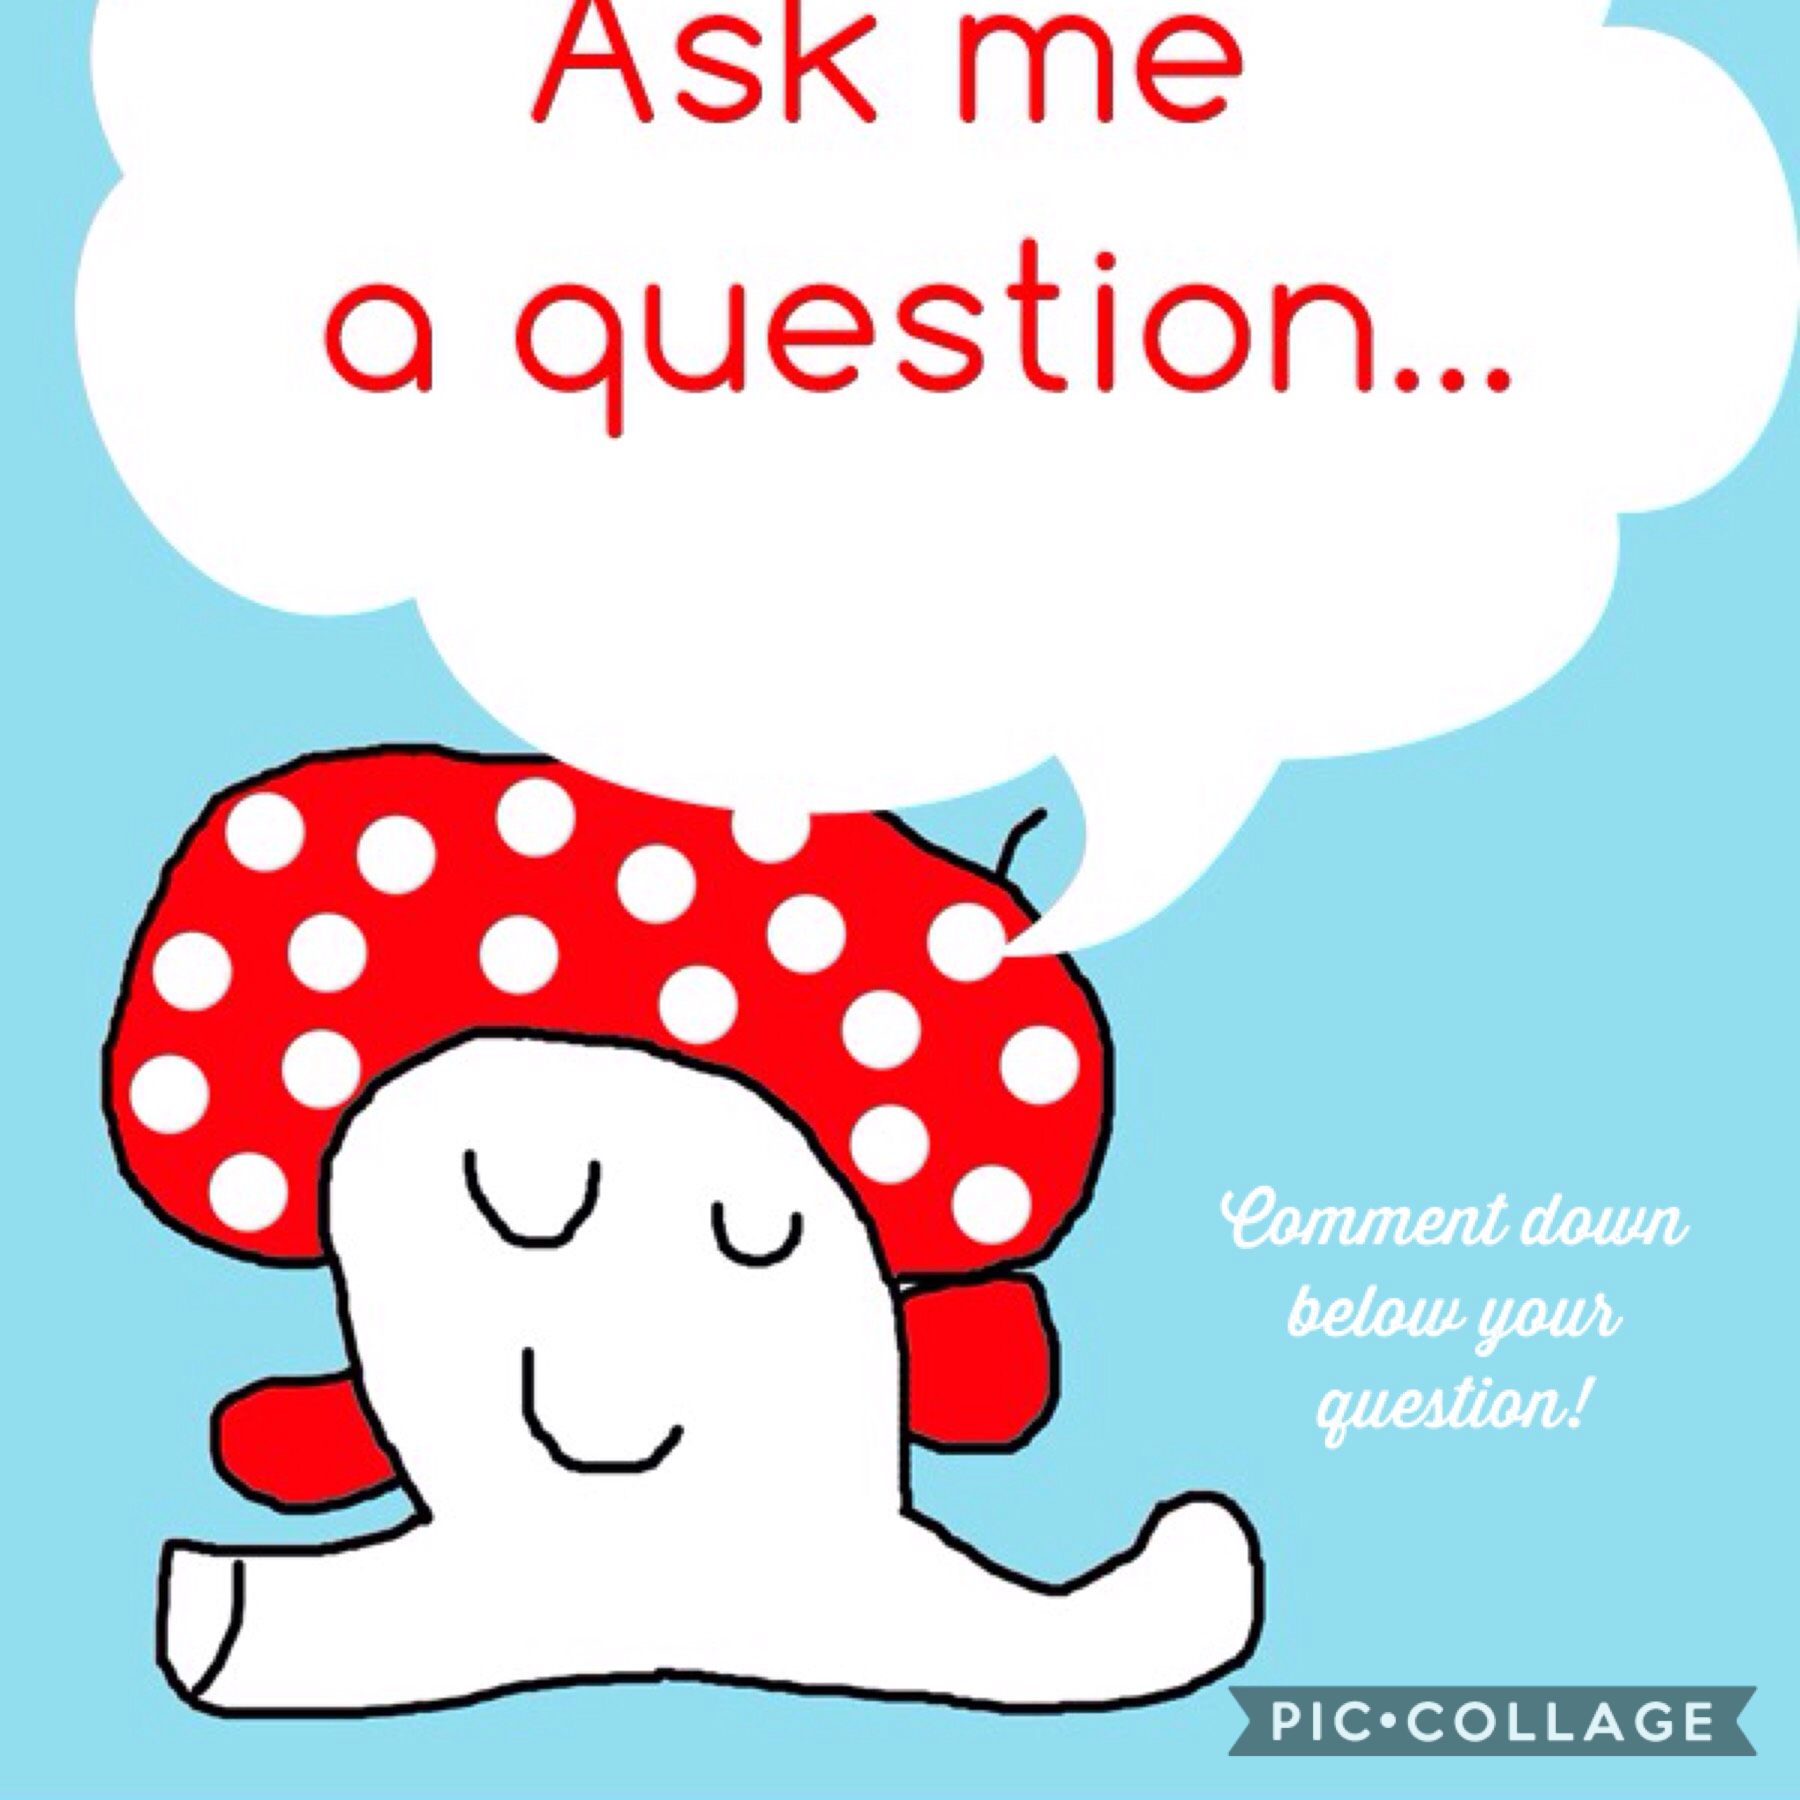 Ask me a question!